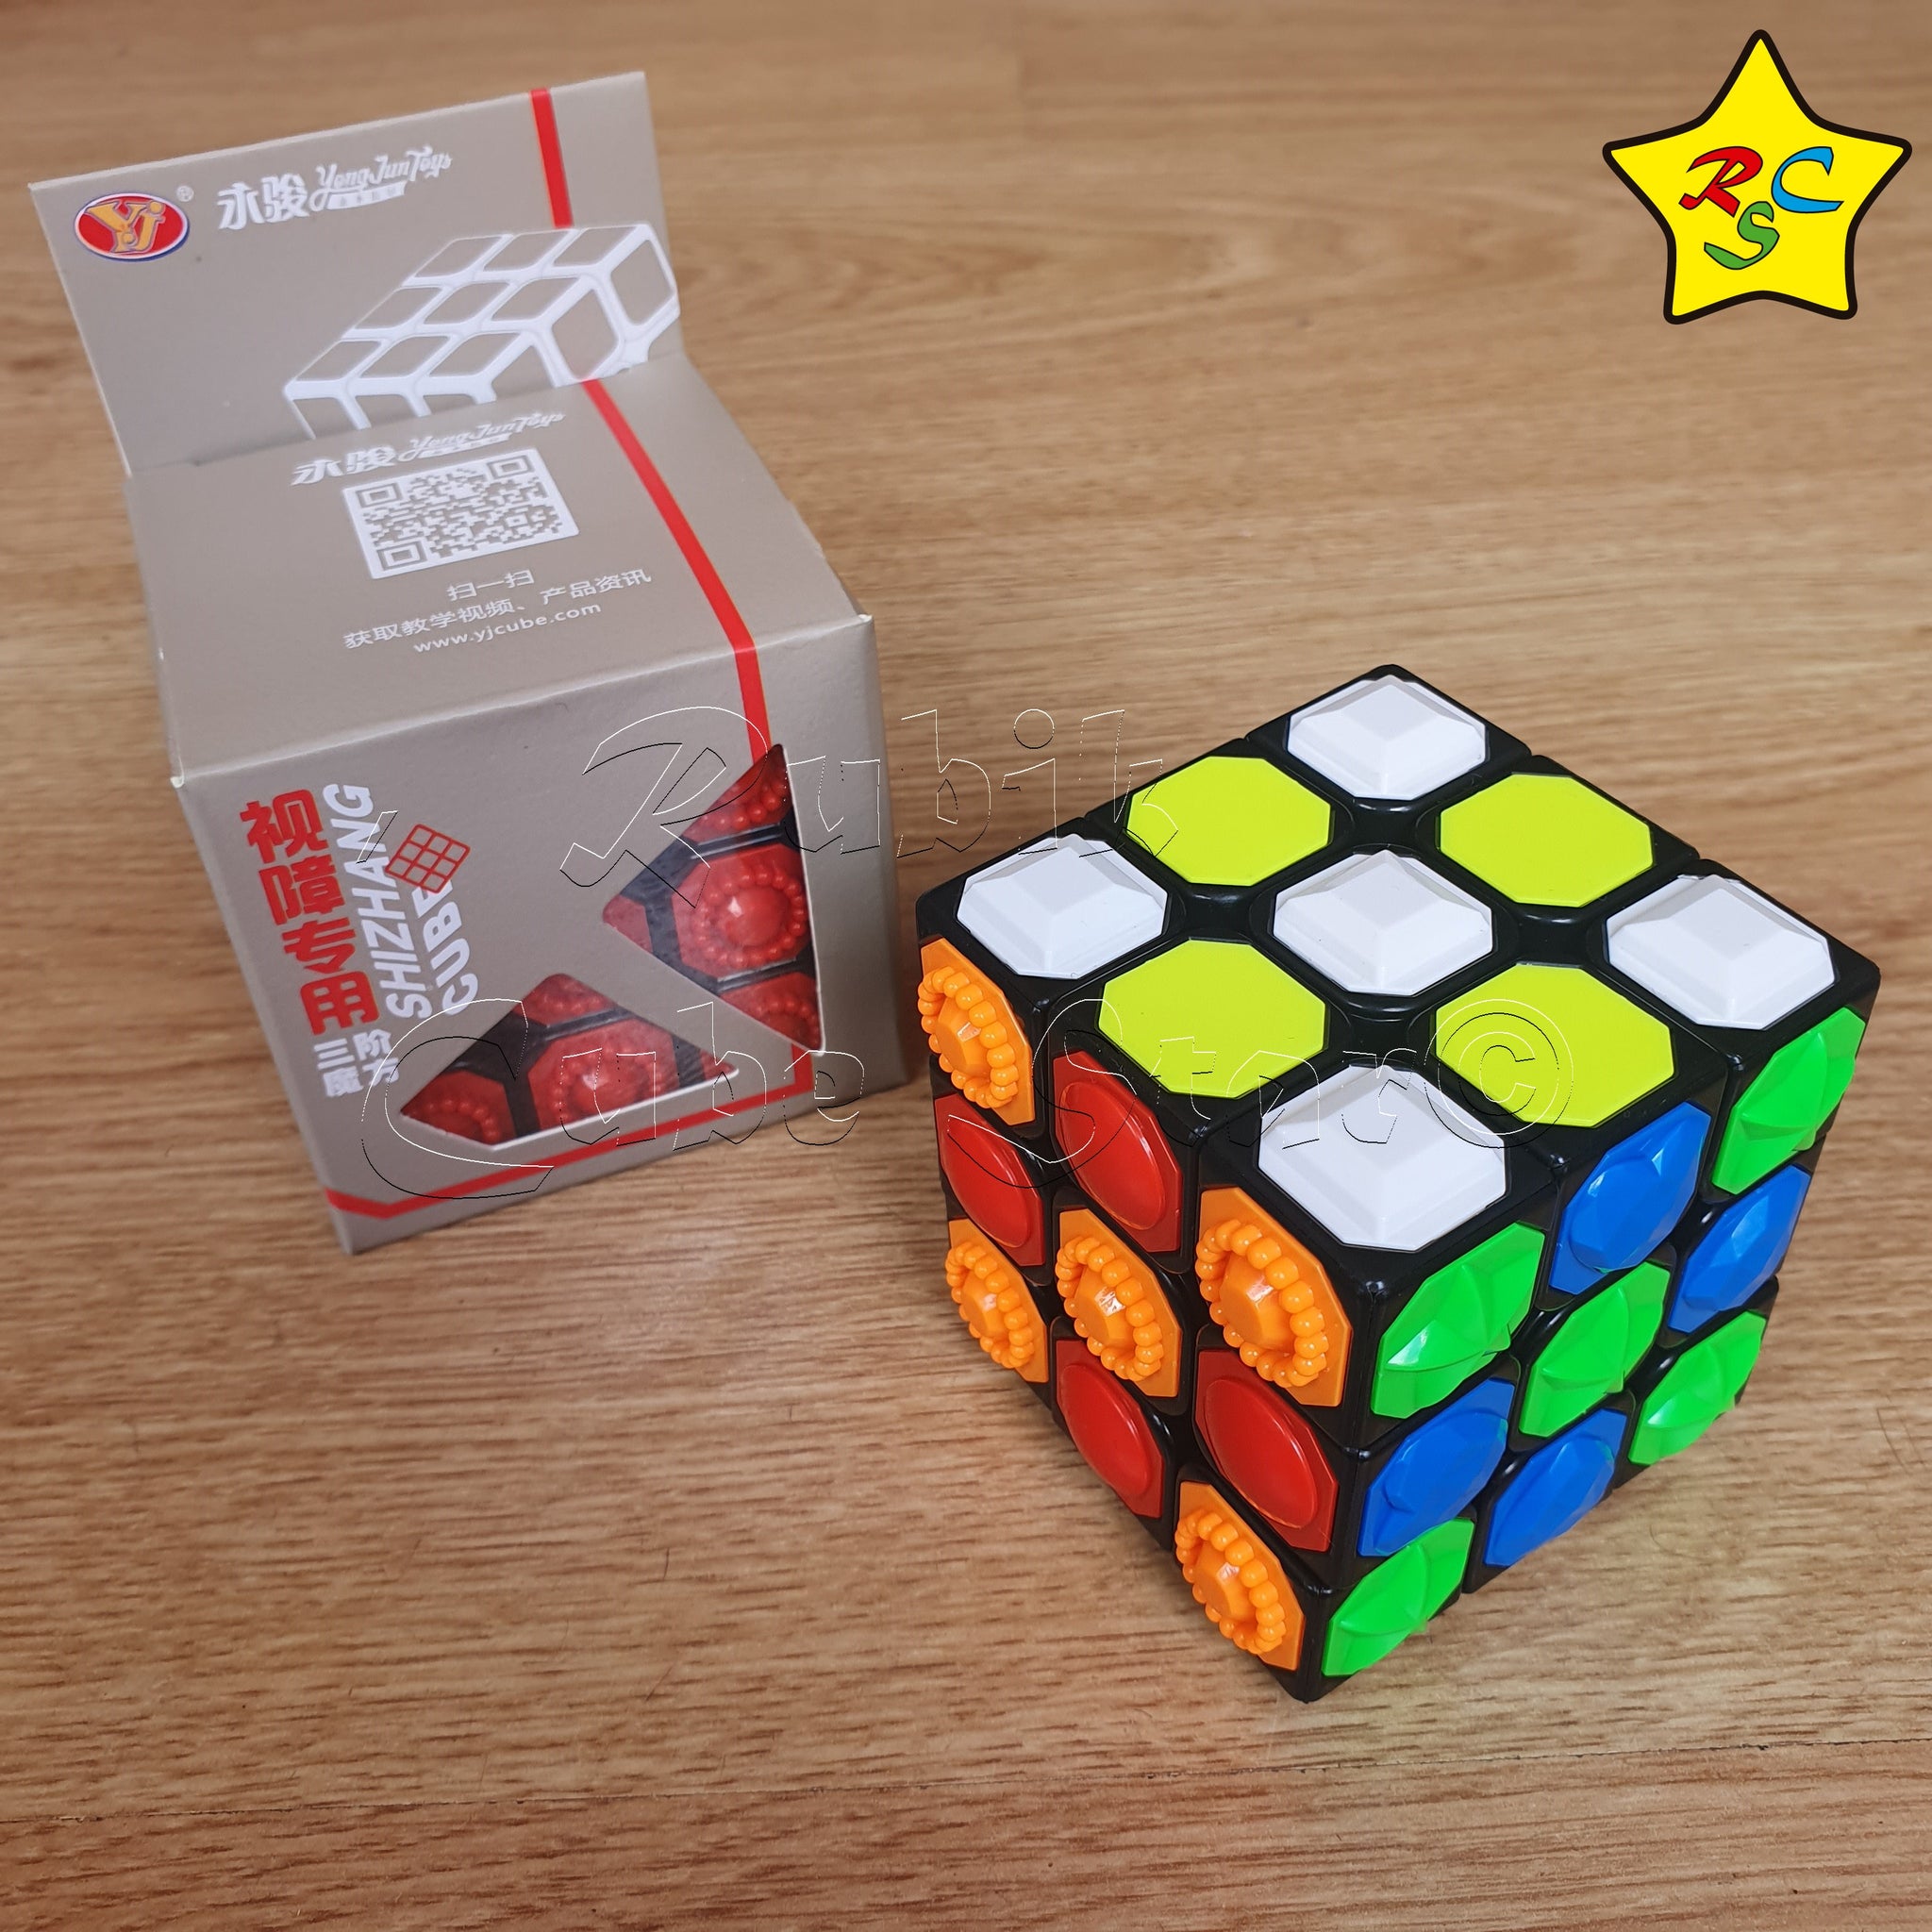 Tipos De Cubos Rubik Cubo Rubik 3x3 Blind Yj Textura Formas Tacto Reto A Ciegas – Rubik Cube Star